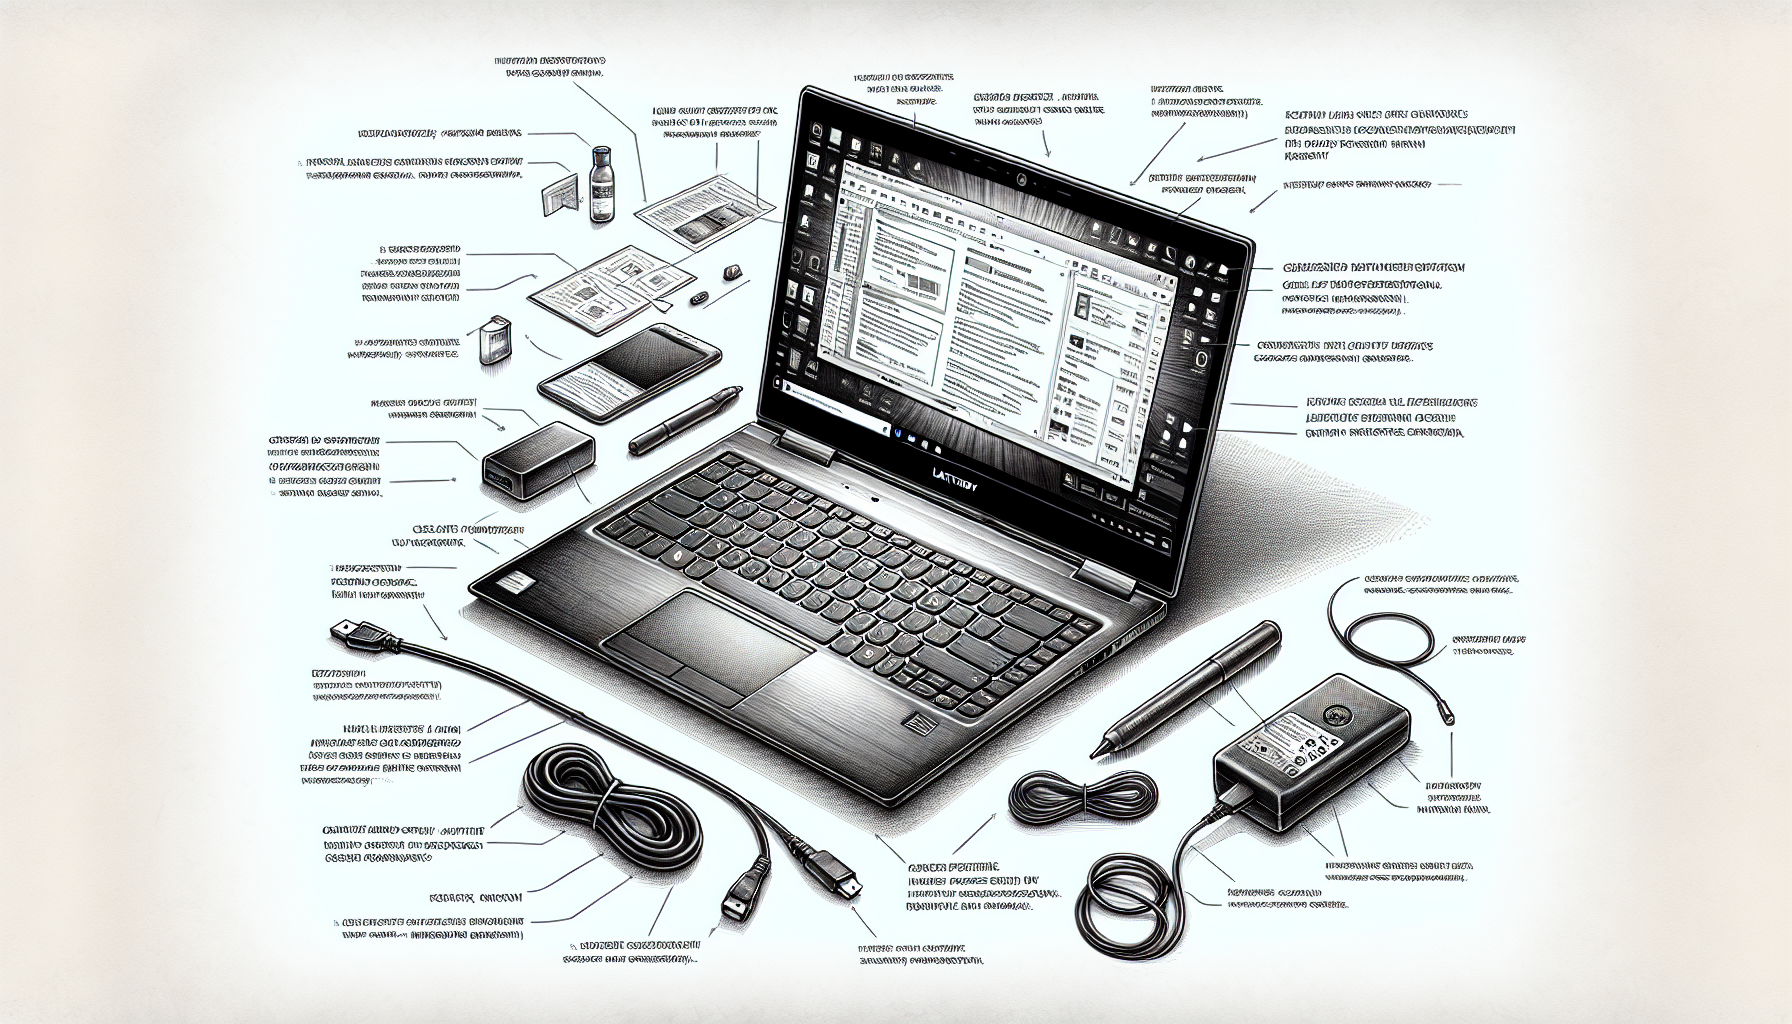 Dell Latitude E5470 I5 6th Gen, 256GBSSD, 8GB Ram Laptop- A Comprehensive Review